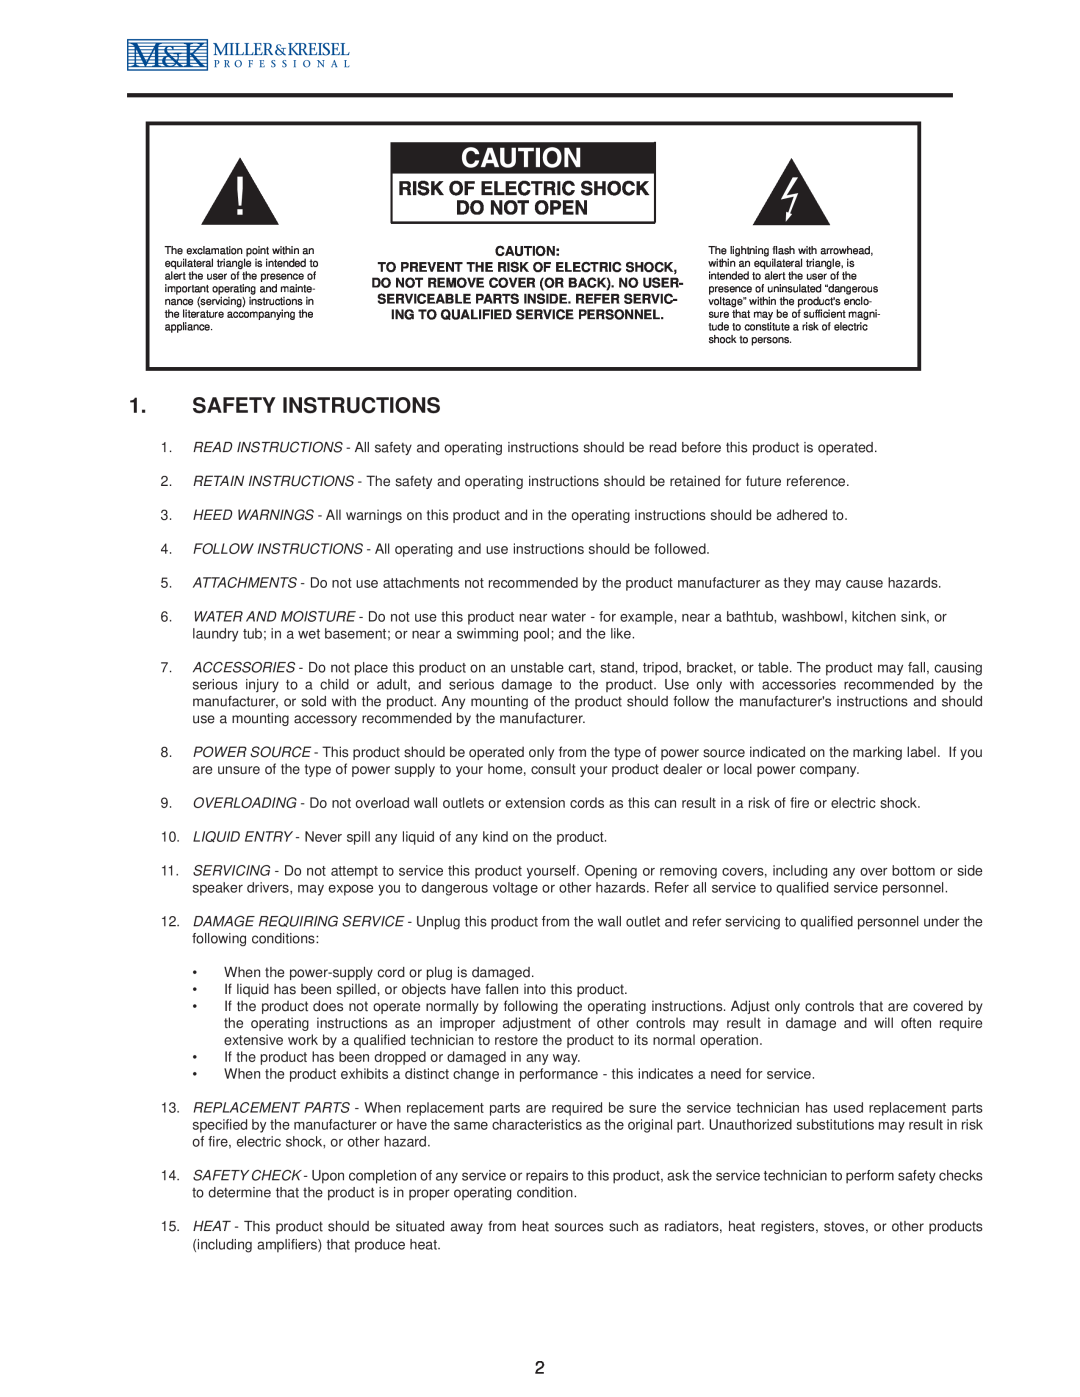 MK Sound MPS-2810 operation manual Safety Instructions 